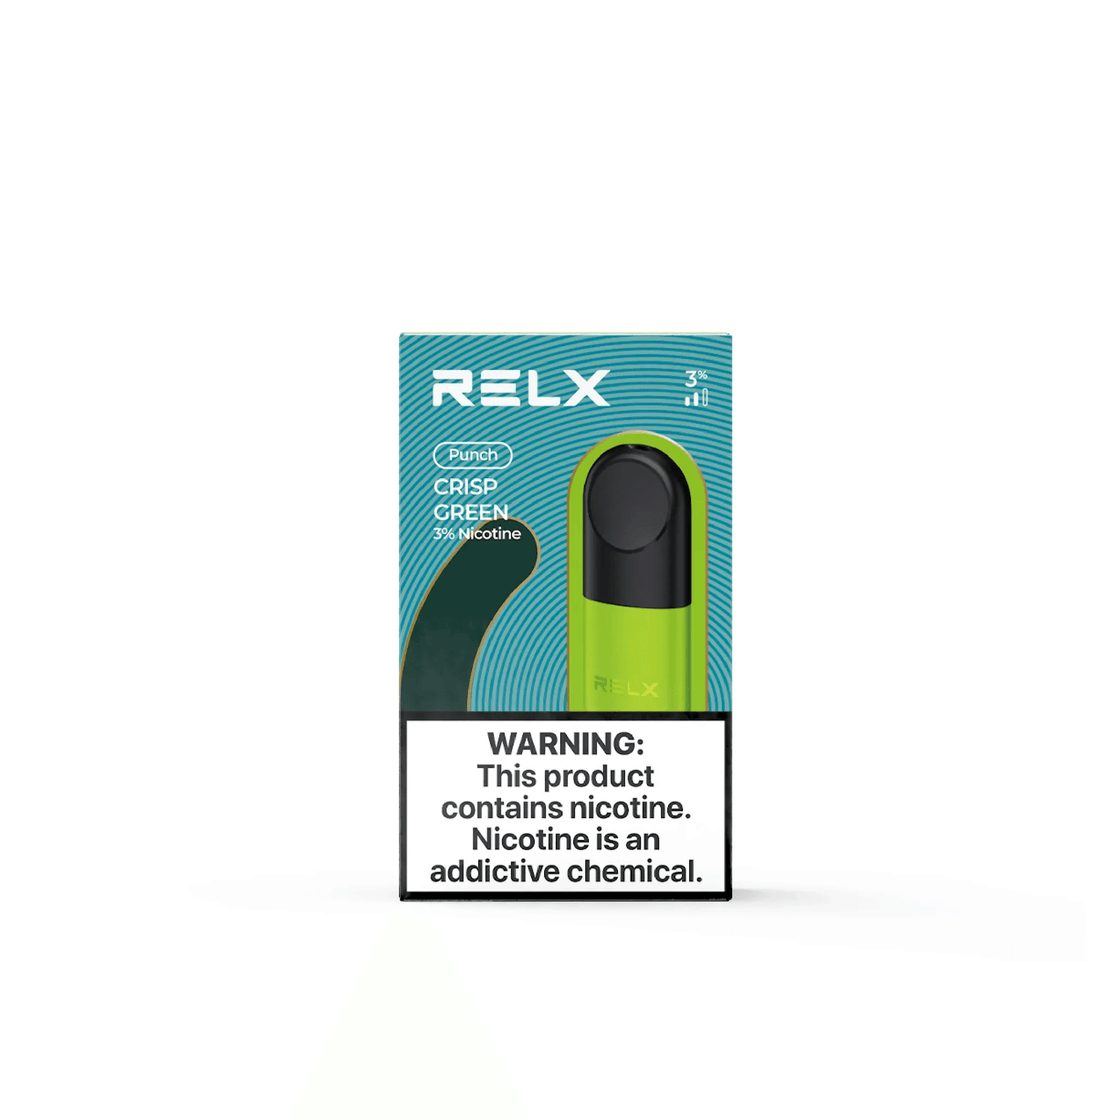 RELX Pod Pro - Crisp Green